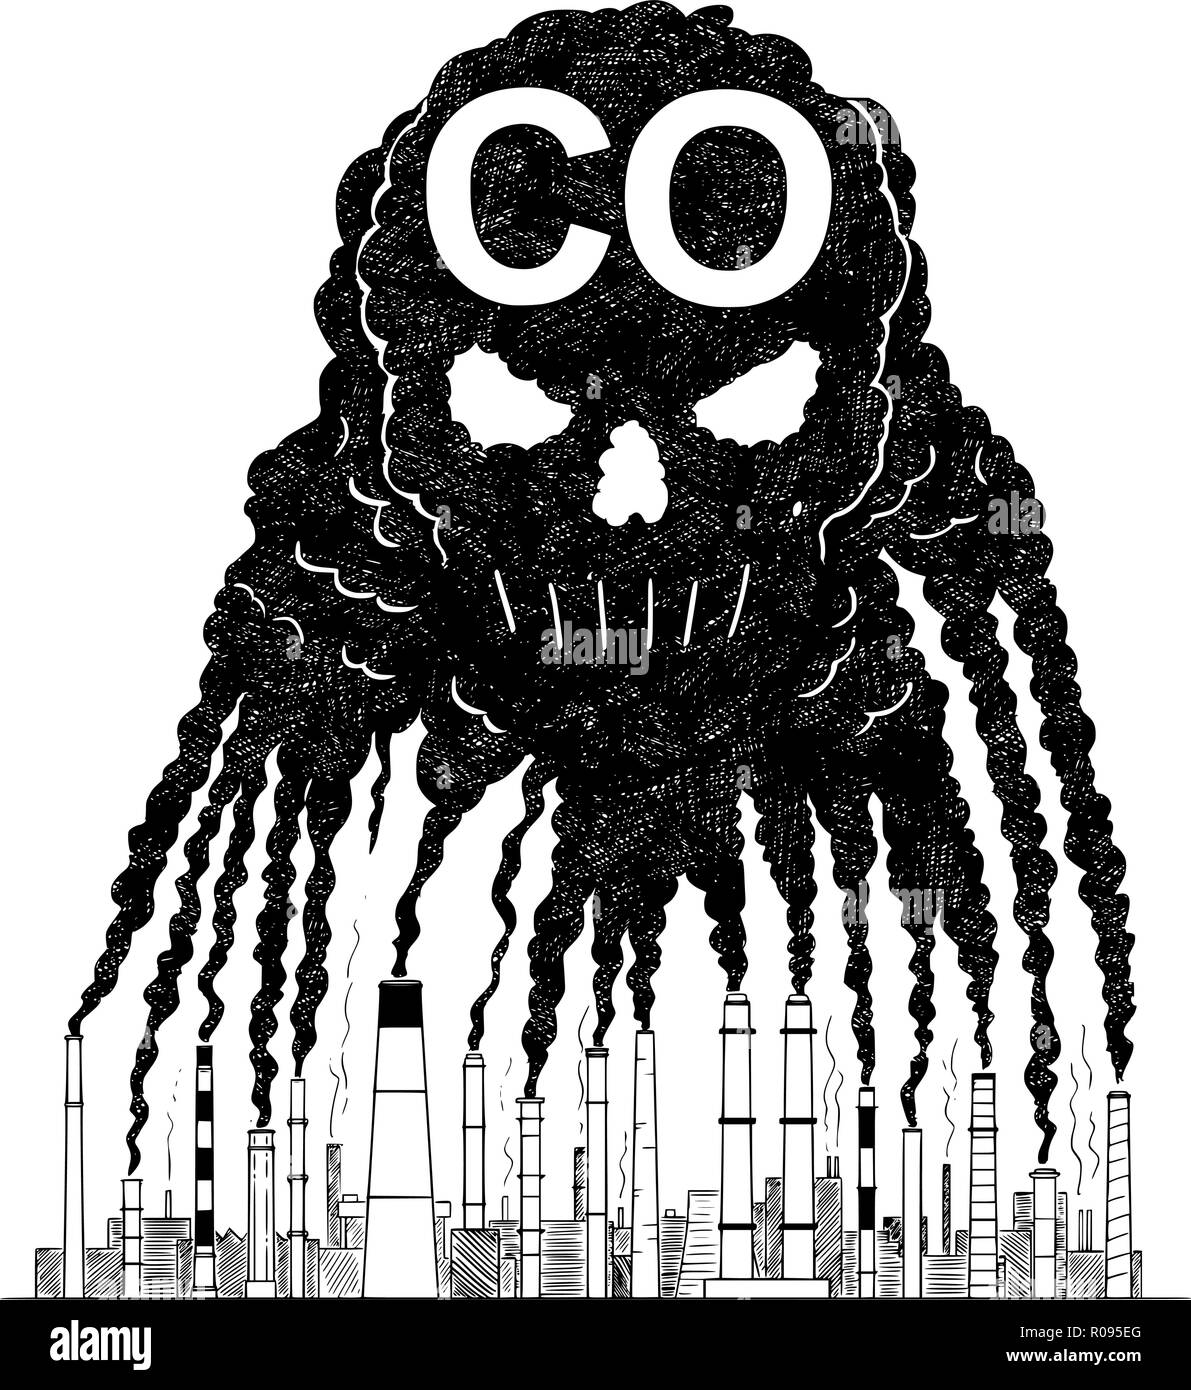 Air Pollution Vector Art & Graphics | freevector.com